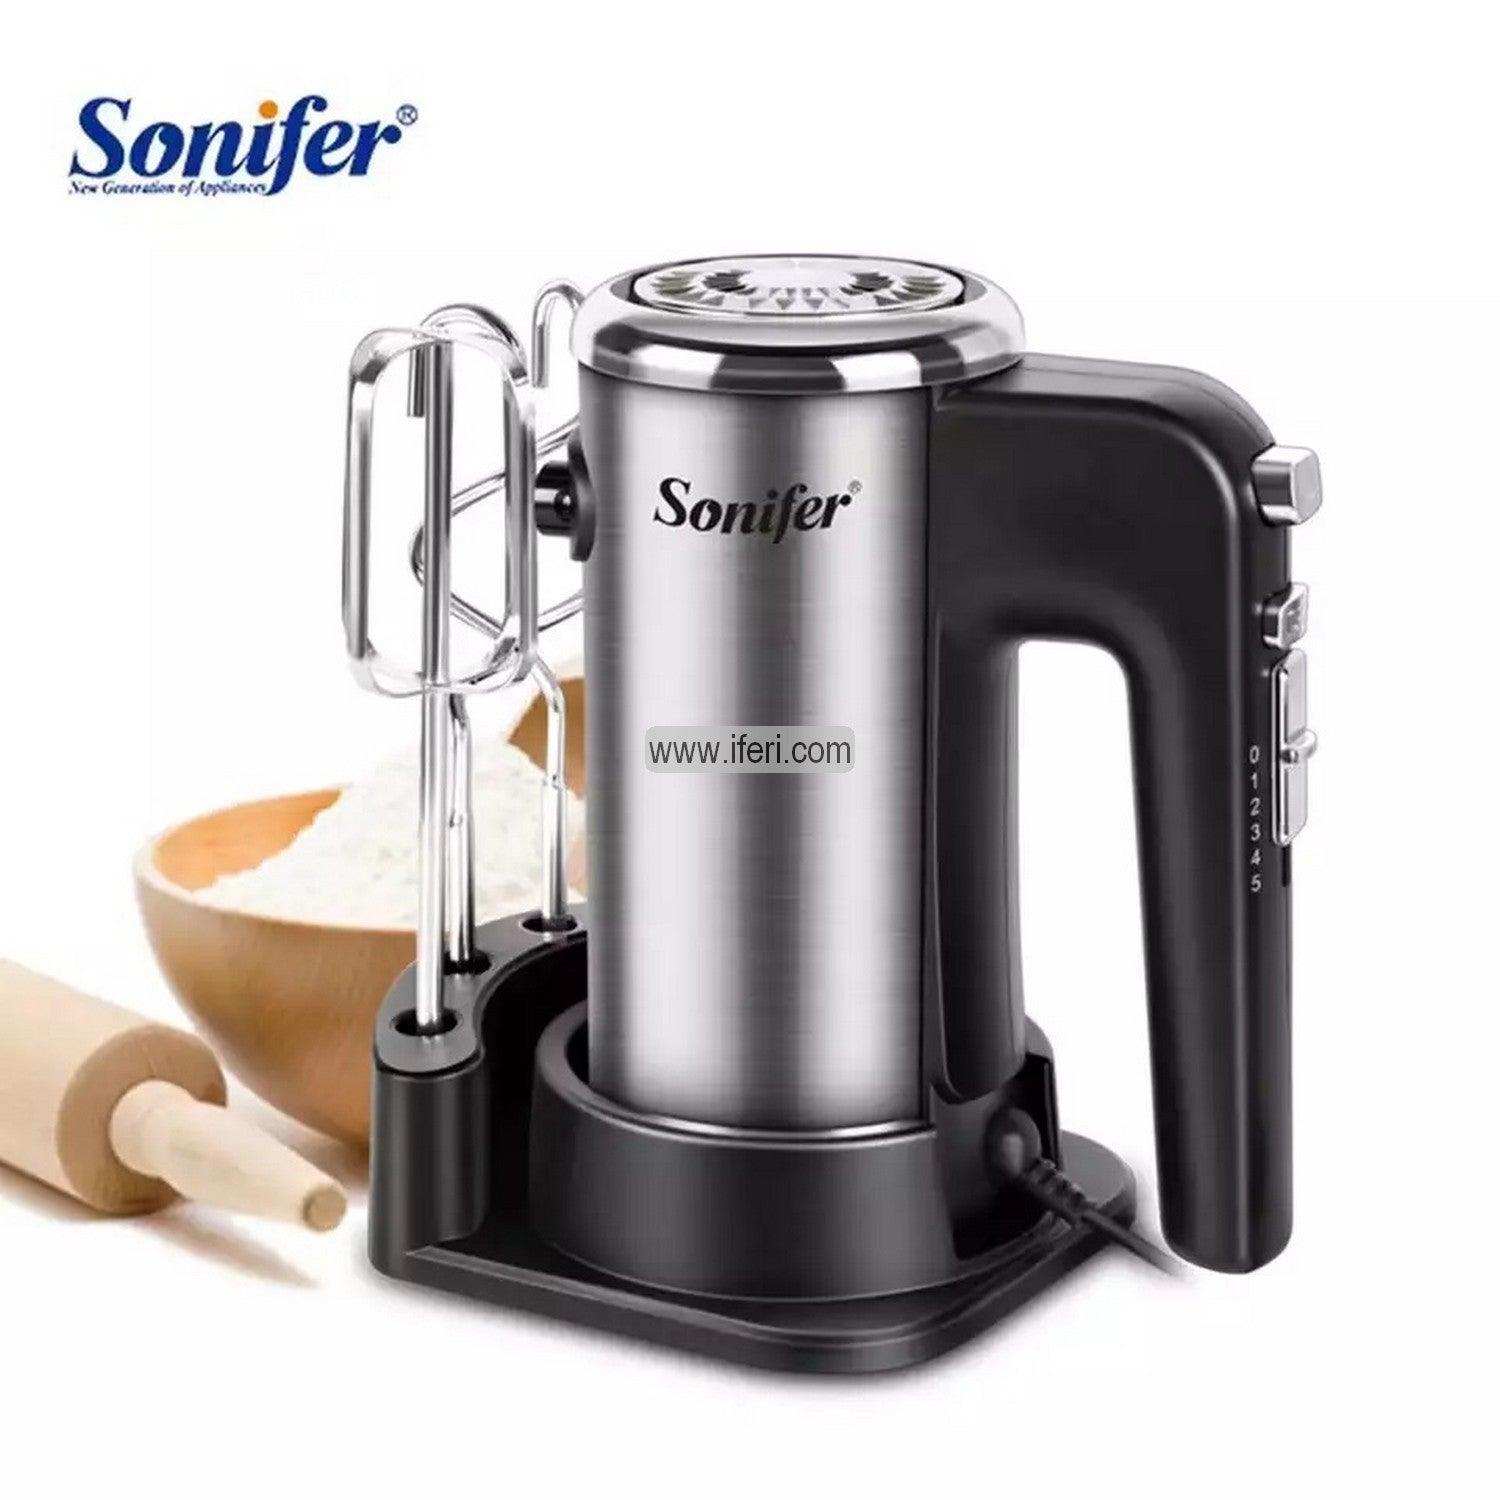 Sonifer 300W Hand Mixer SF-7022 Price in Bangladesh - iferi.com